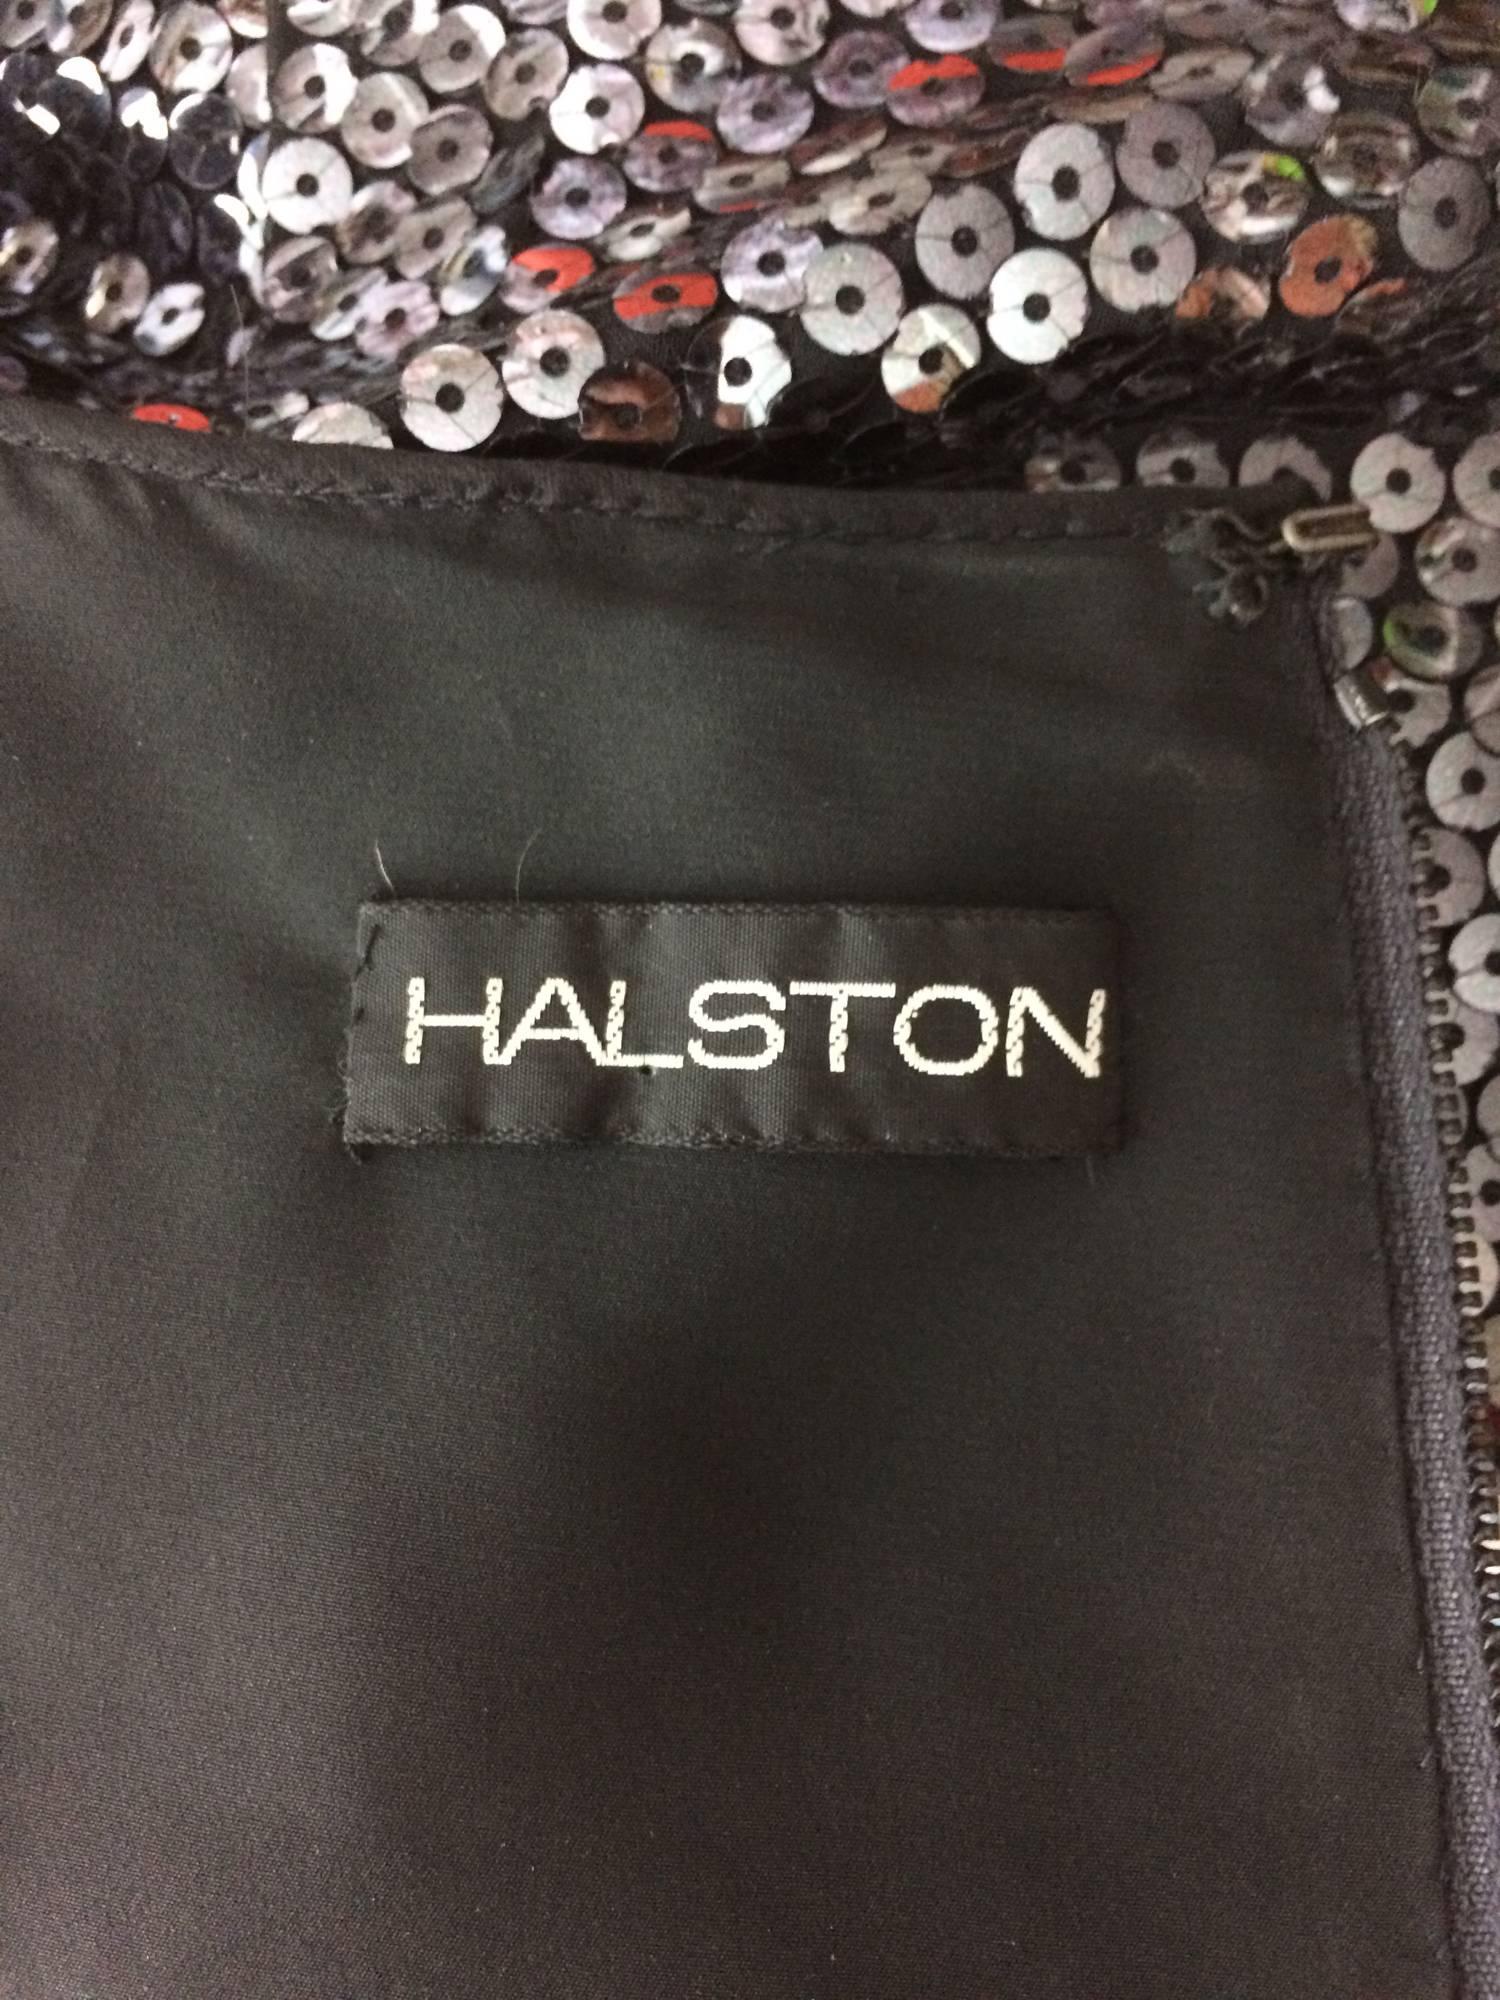 Halston glittery black sequin bat wing evening gown  3